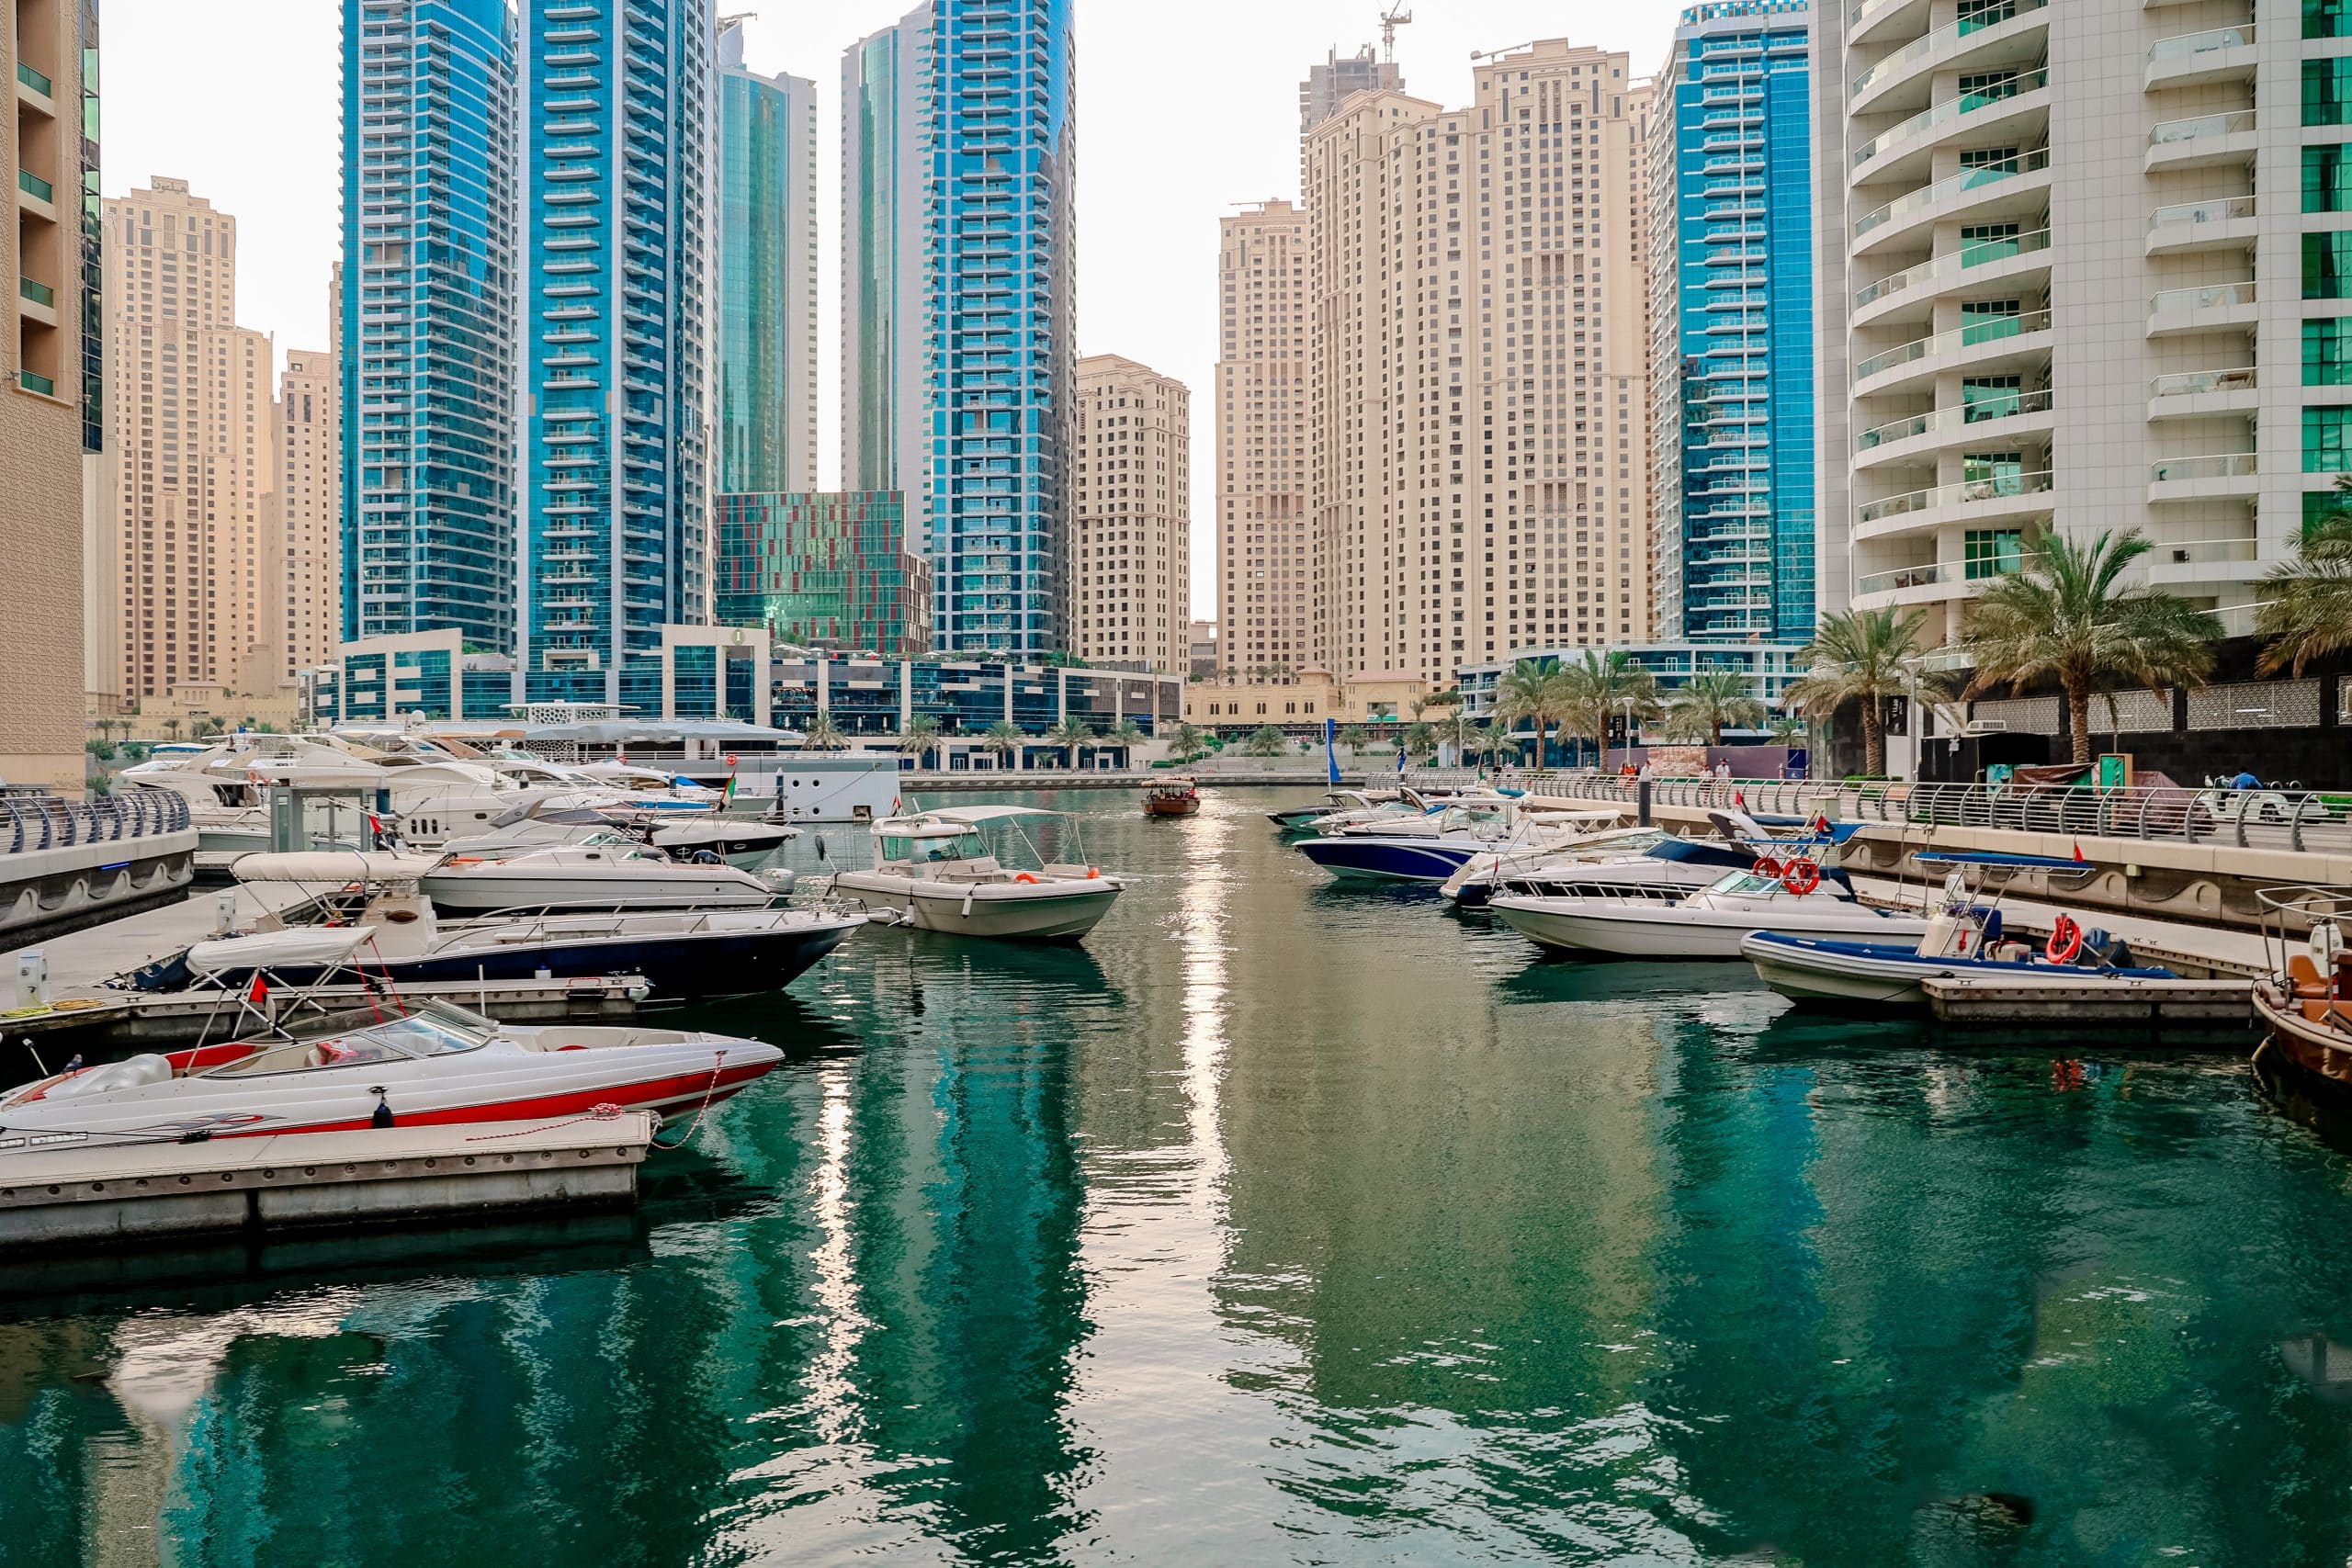 Dubai Marina in a summer day, UAE